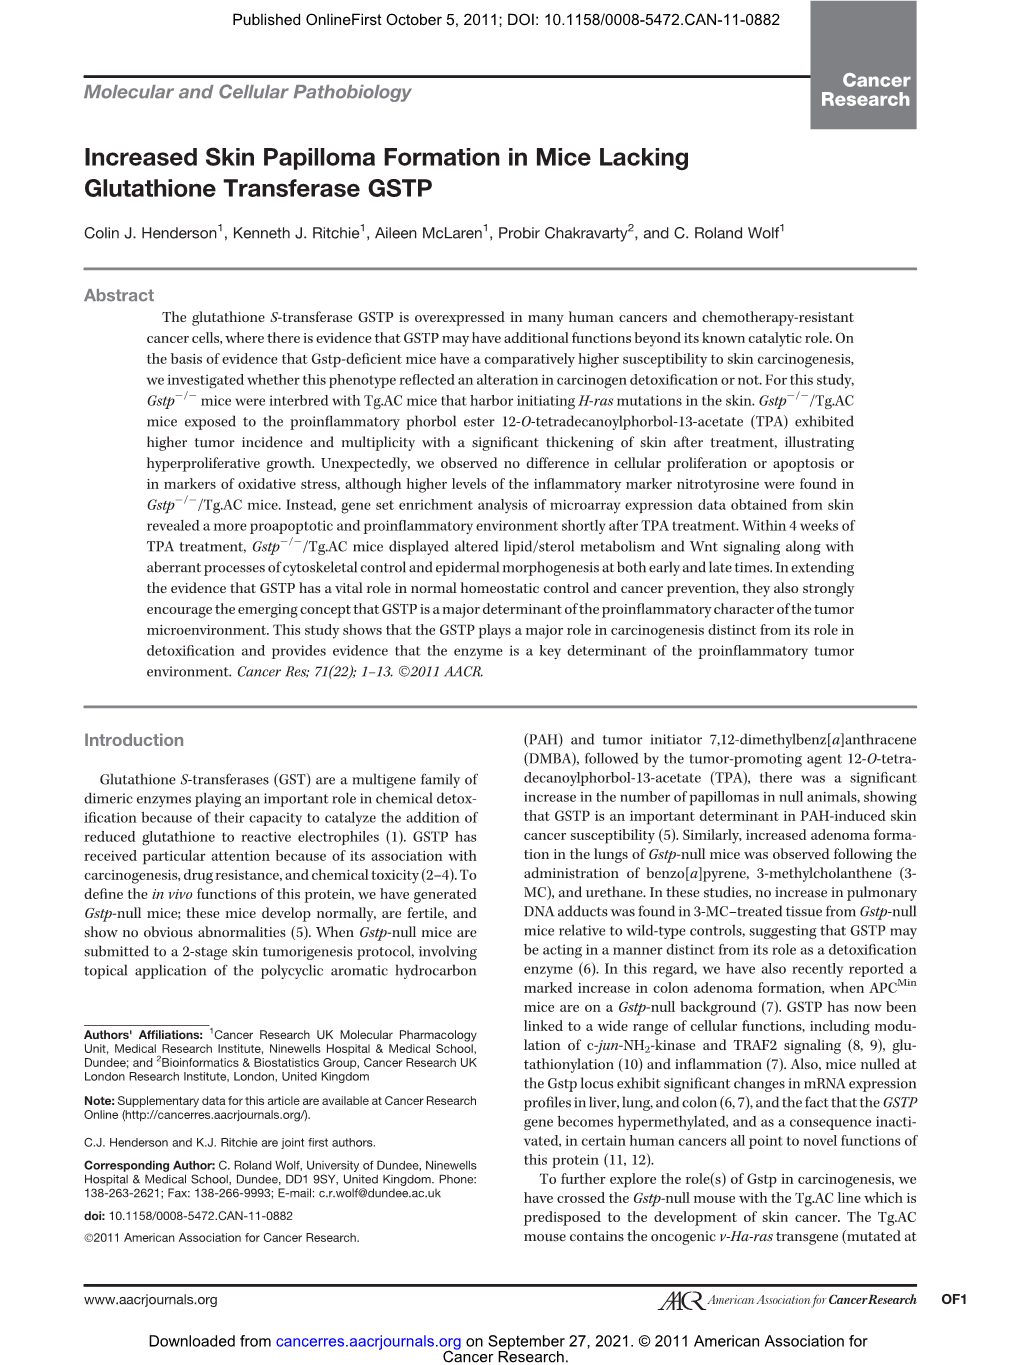 Increased Skin Papilloma Formation in Mice Lacking Glutathione Transferase GSTP